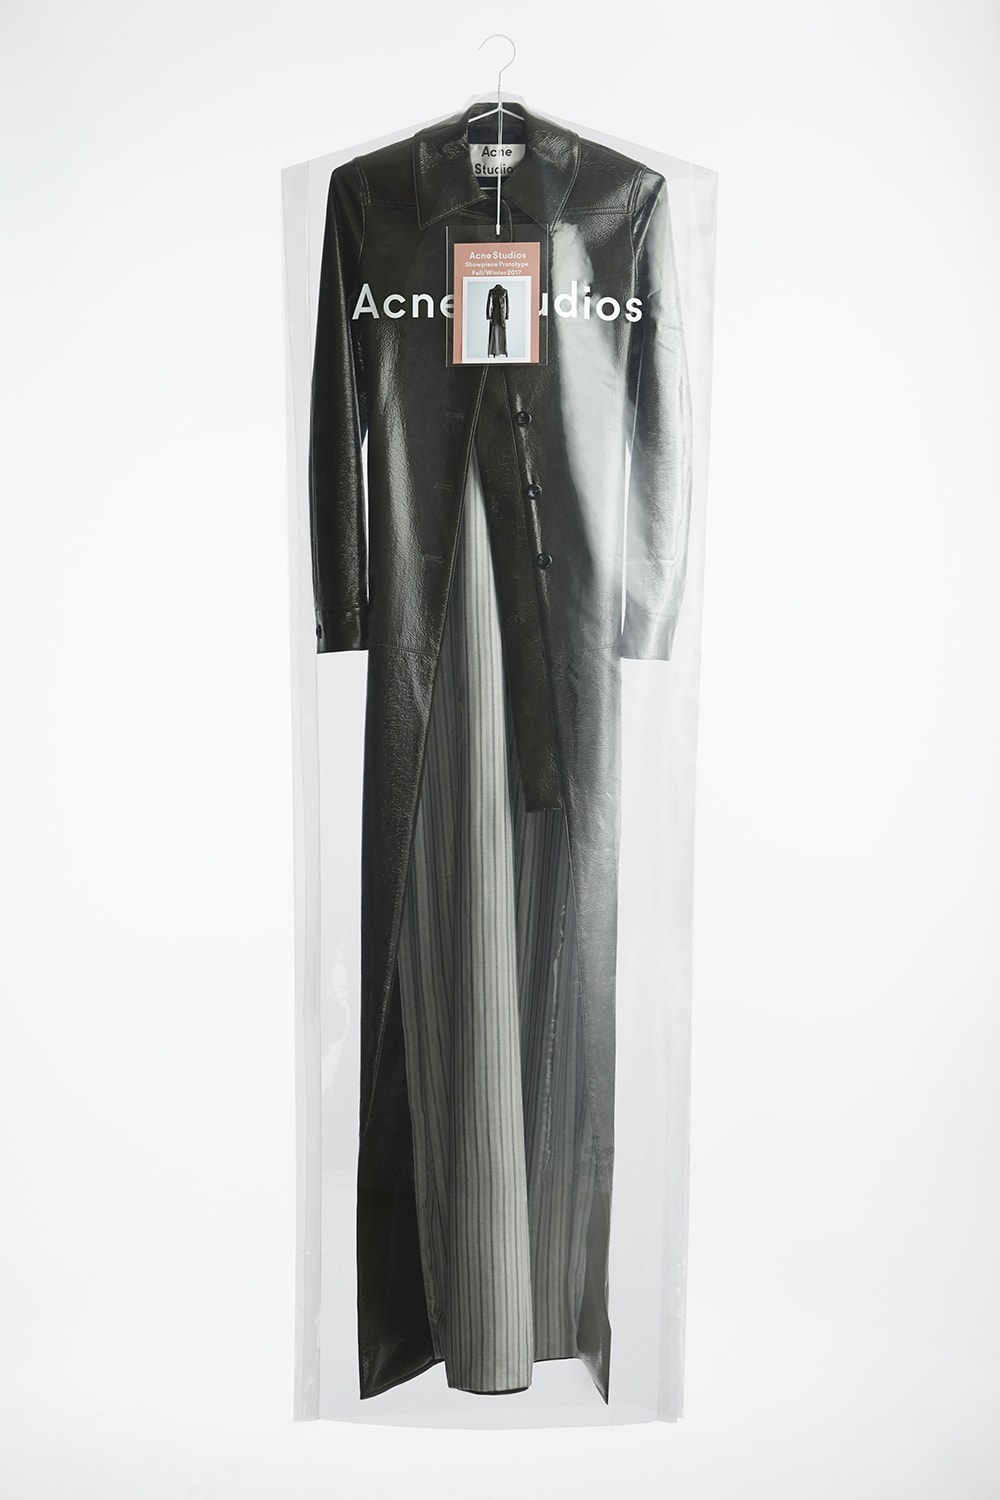 Acne Studios Showpiece Prototype Exclusive Limited Range Leather Jacket